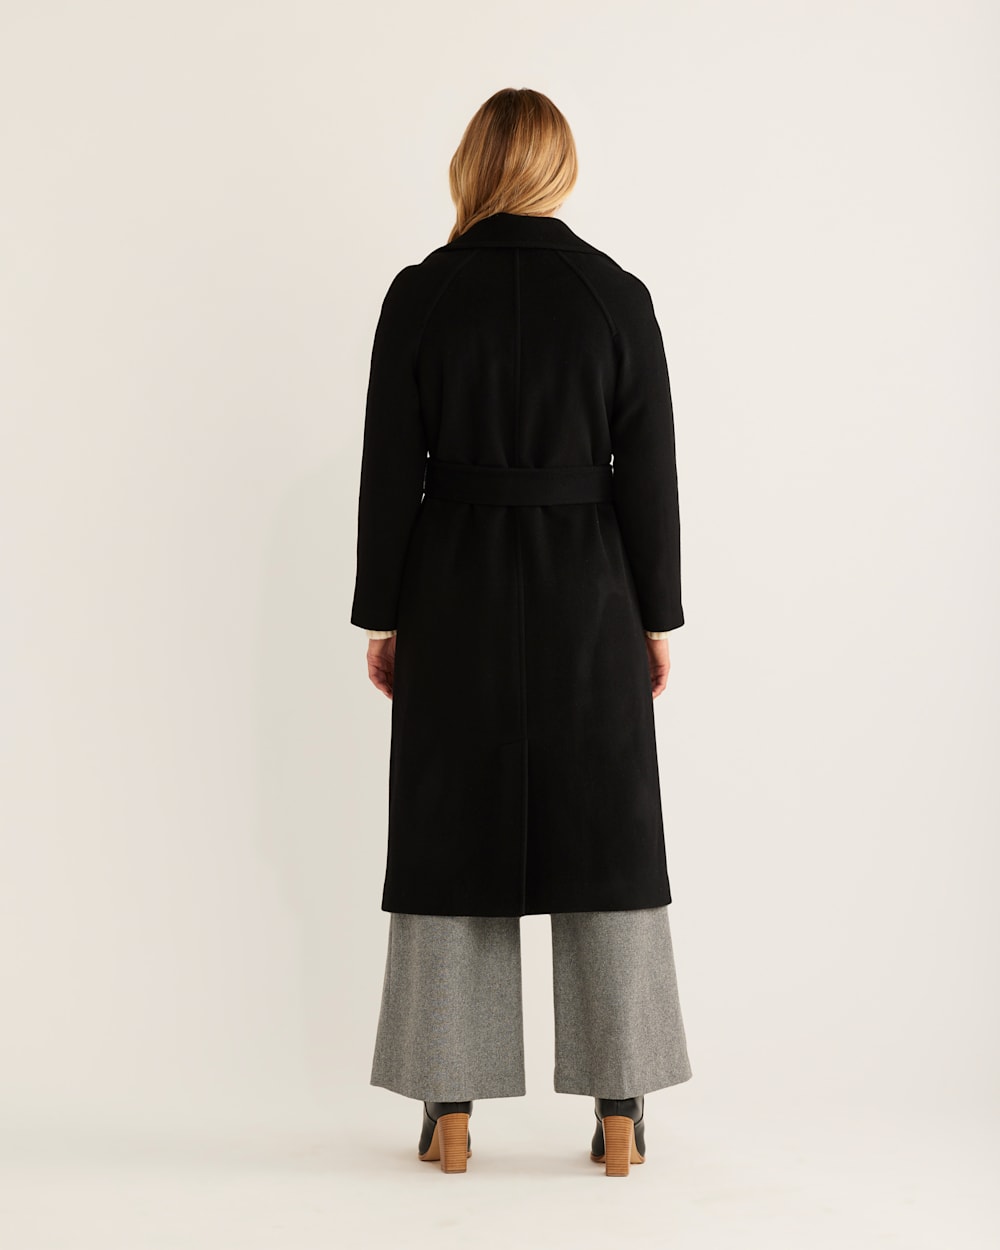 Shop Chic Uptown Long Wool Coat for Women | Pendleton